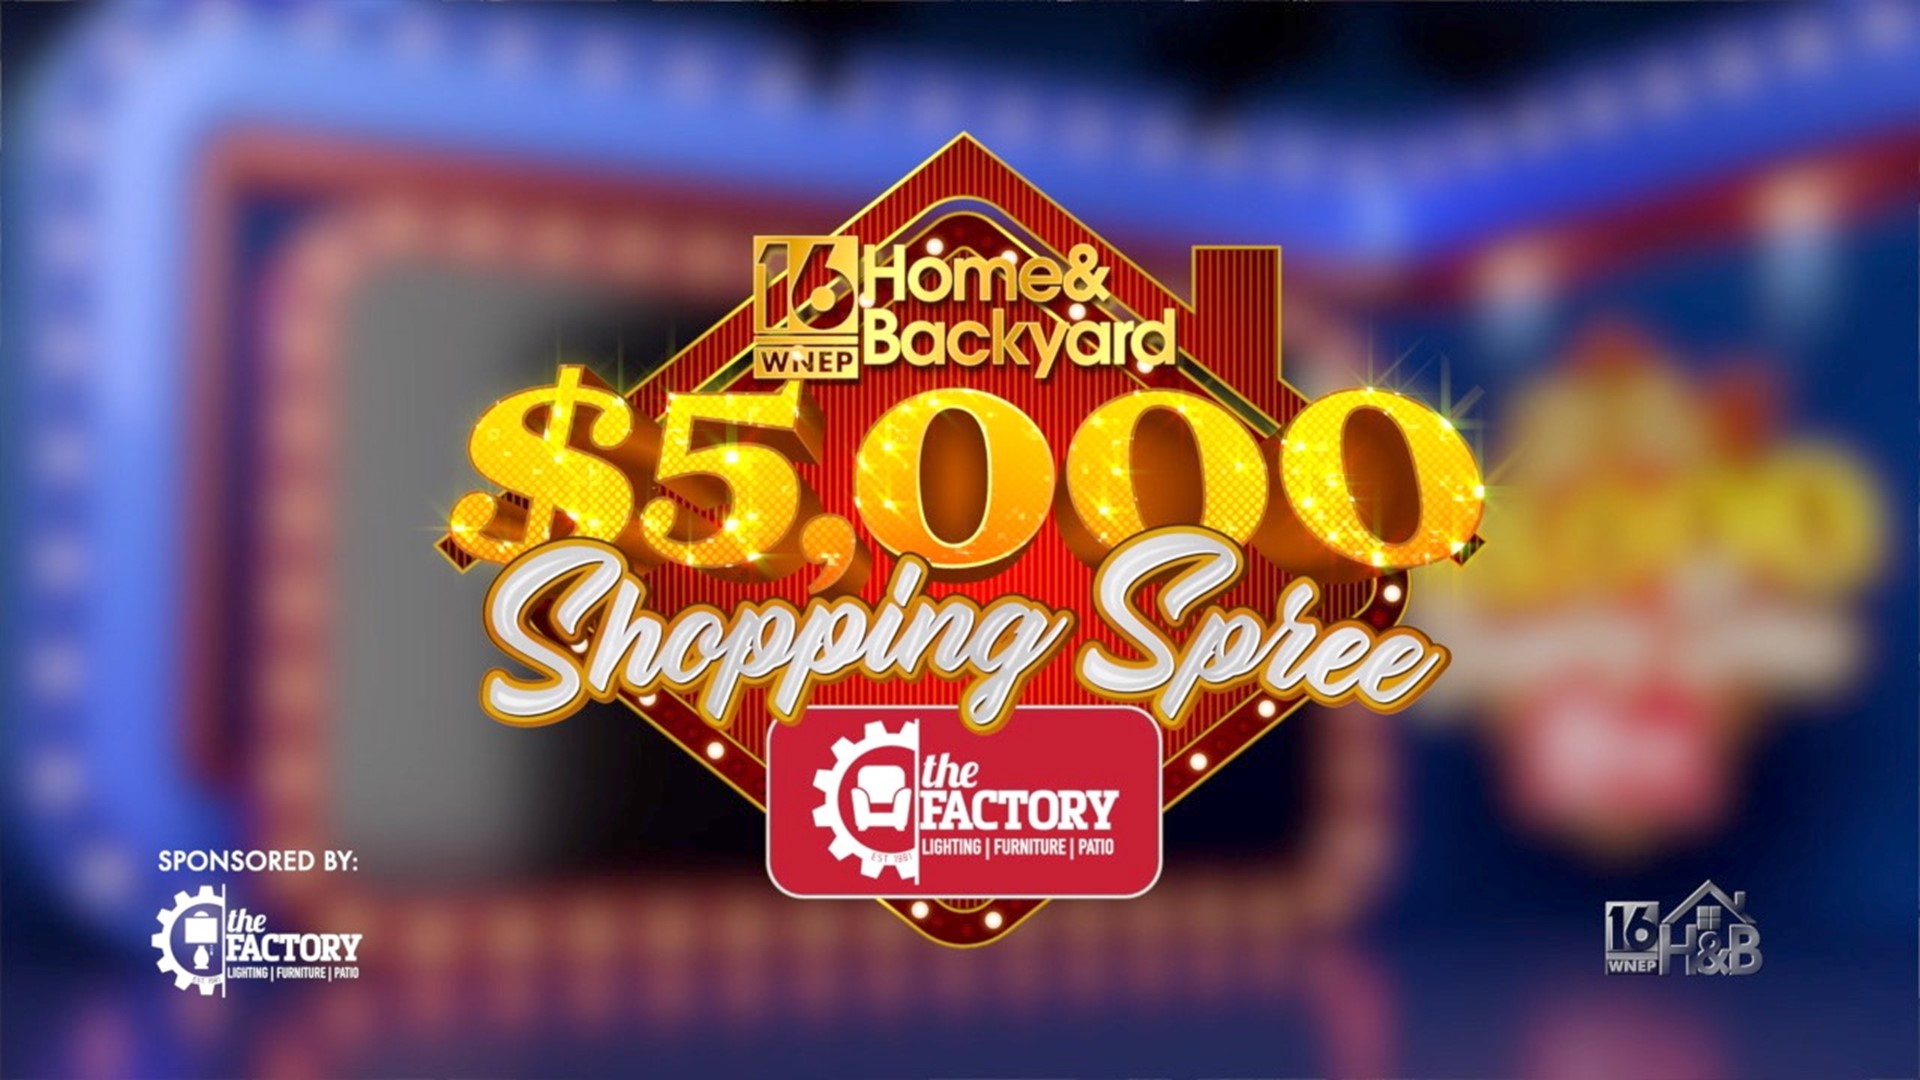 Home & Backyard 5 Thousand Dollar Shopping Spree Courtesy Of The Factory Sneak Peek!